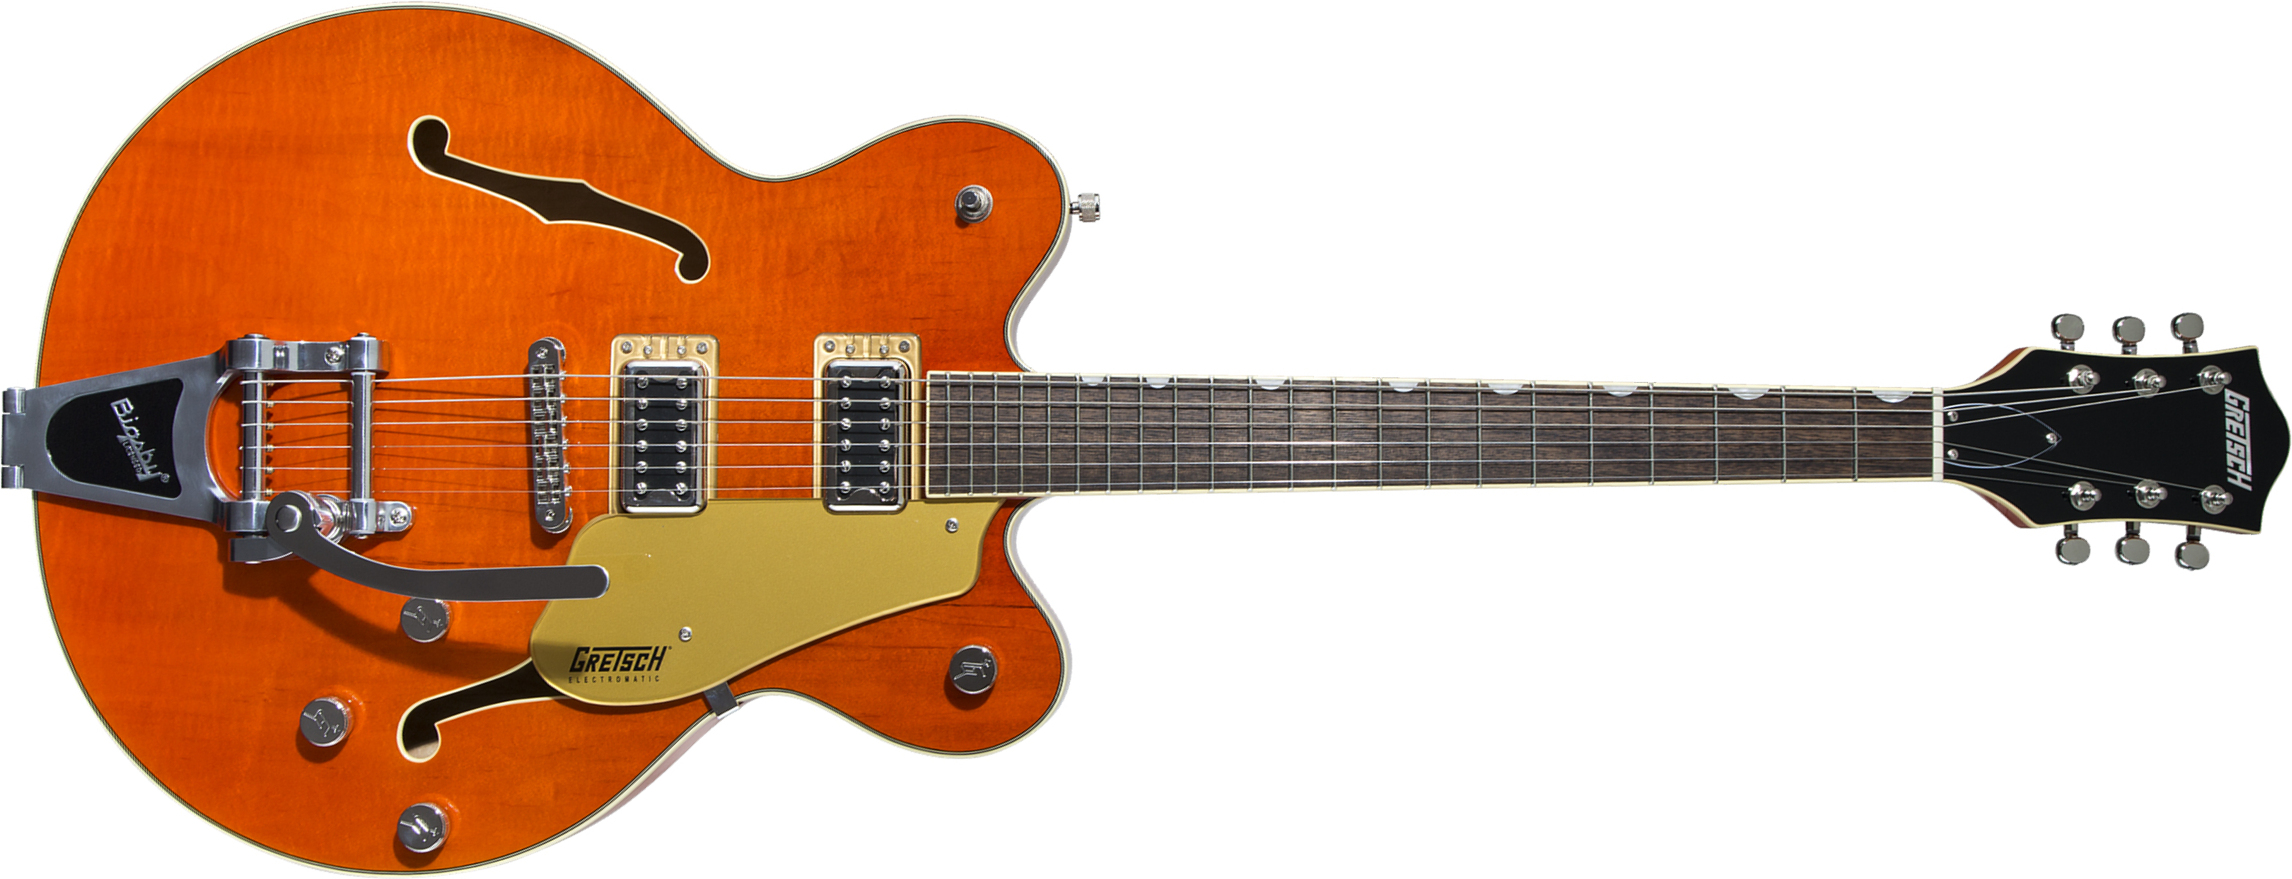 Gretsch G5622t Center Bloc Double Cut Bigsby Electromatic 2019 Hh Lau - Orange Stain - Semi-hollow electric guitar - Main picture